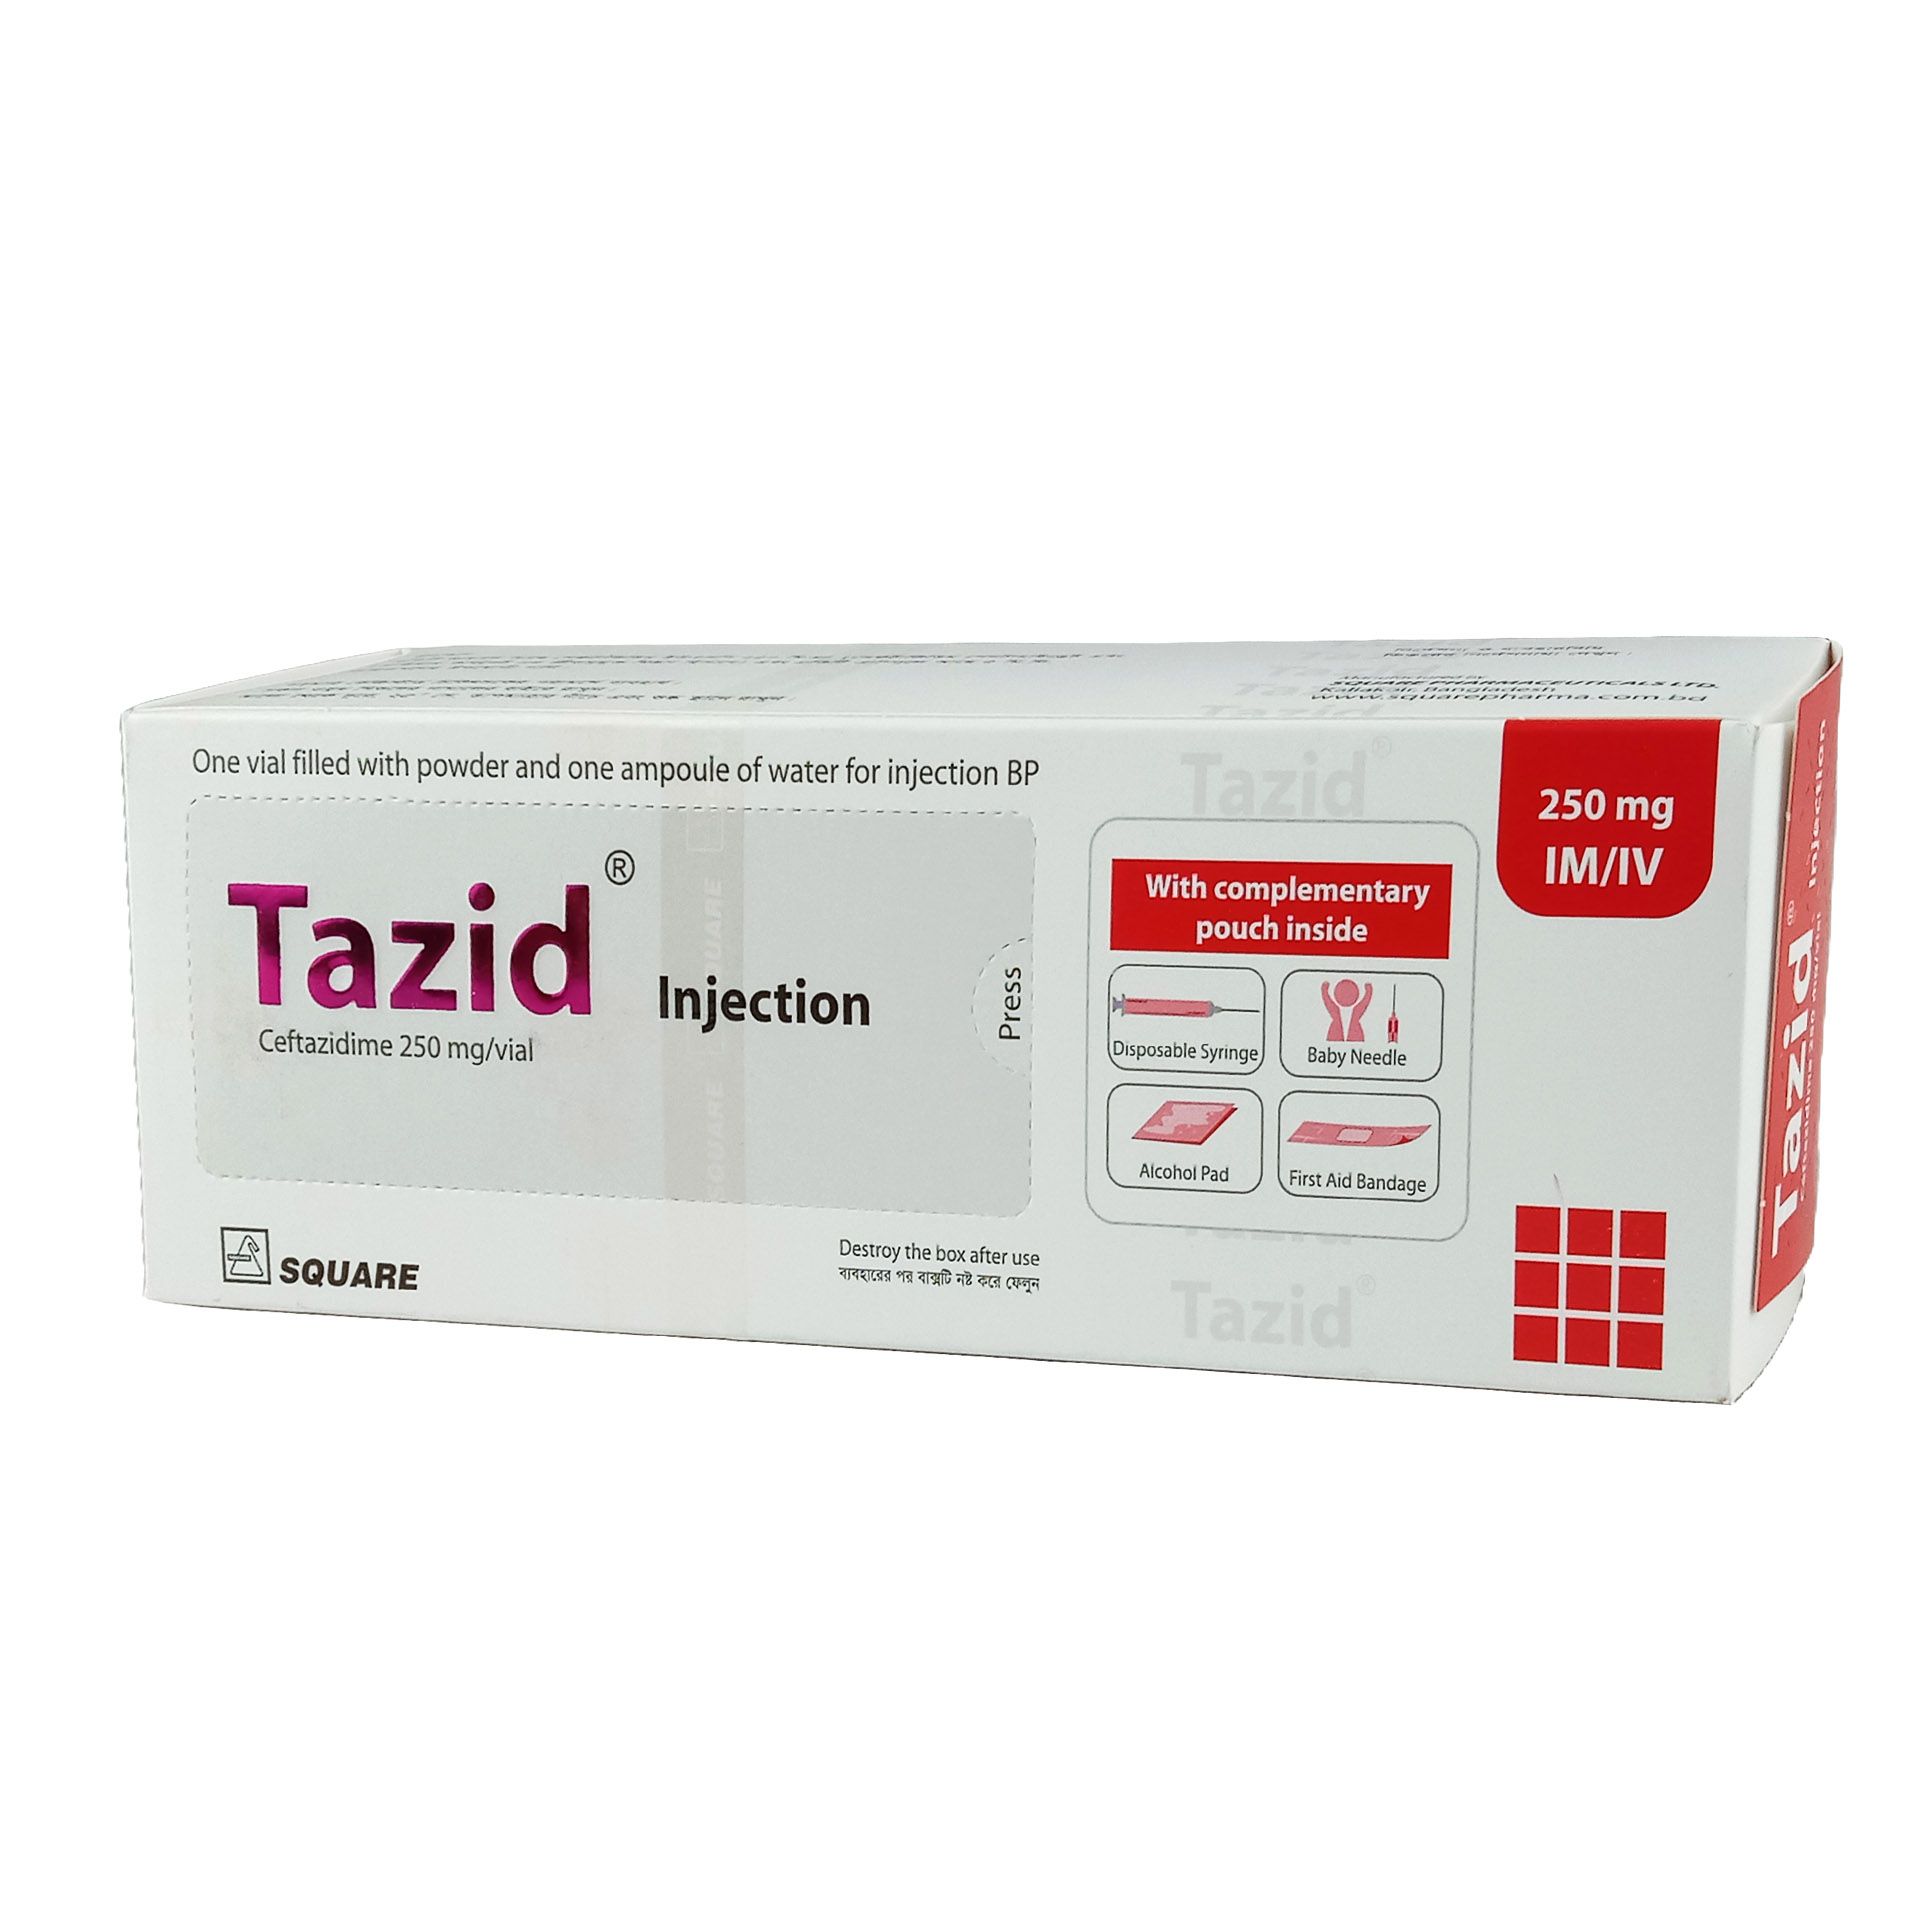 Tazid 250mg IV/IM 250mg/vial Injection